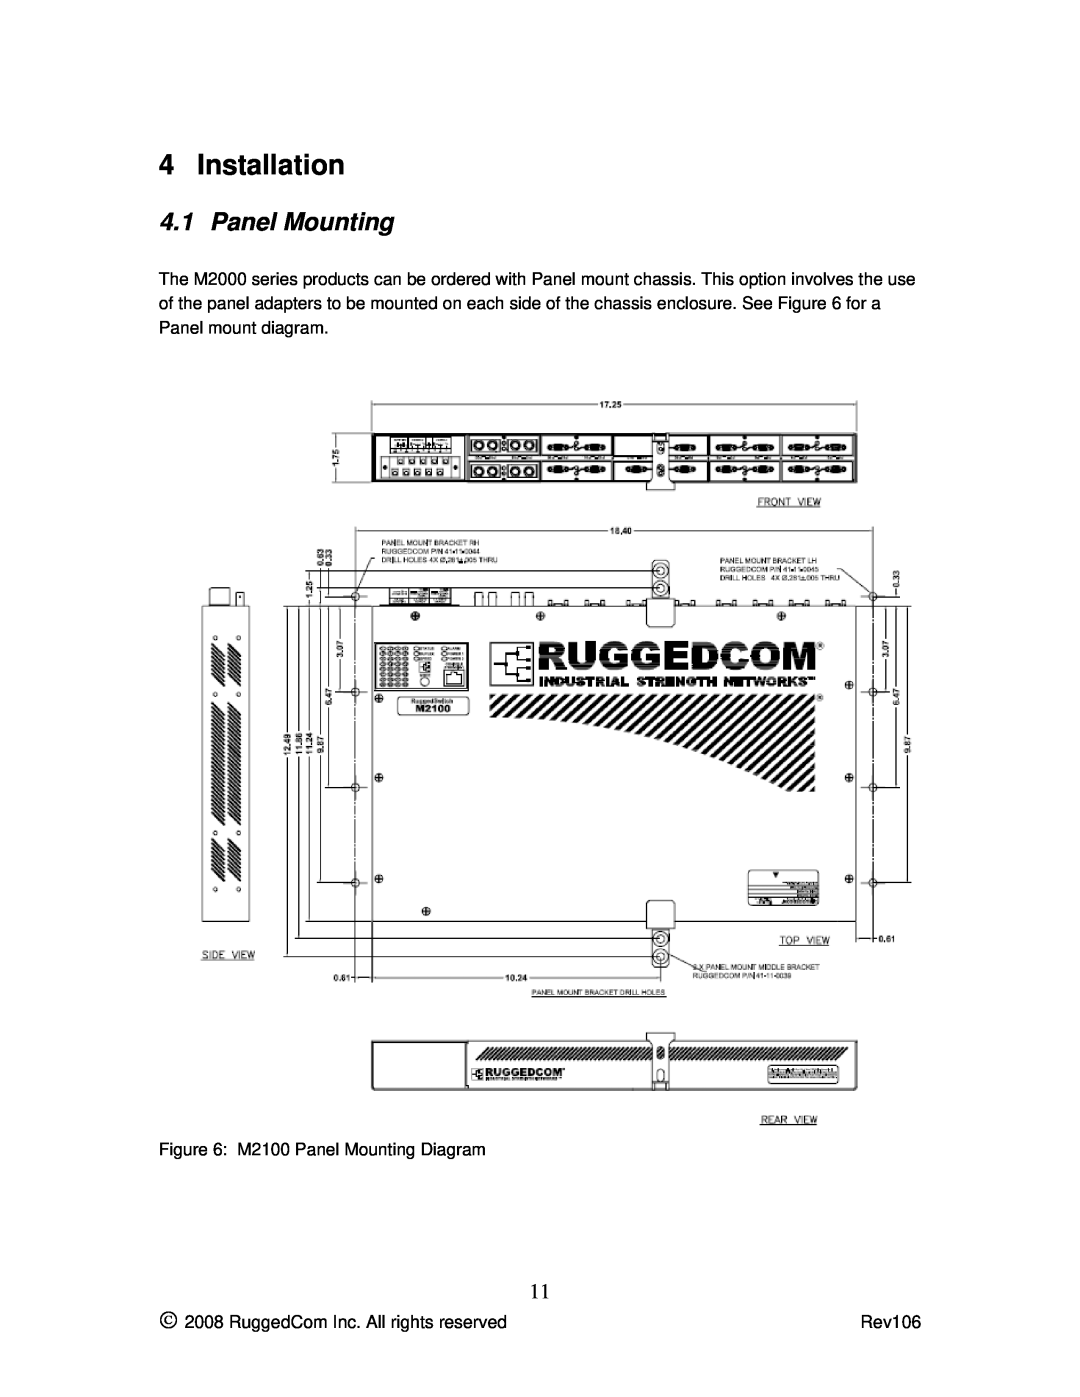 RuggedCom M2100 manual Installation, Panel Mounting, RuggedCom Inc. All rights reserved, Rev106 